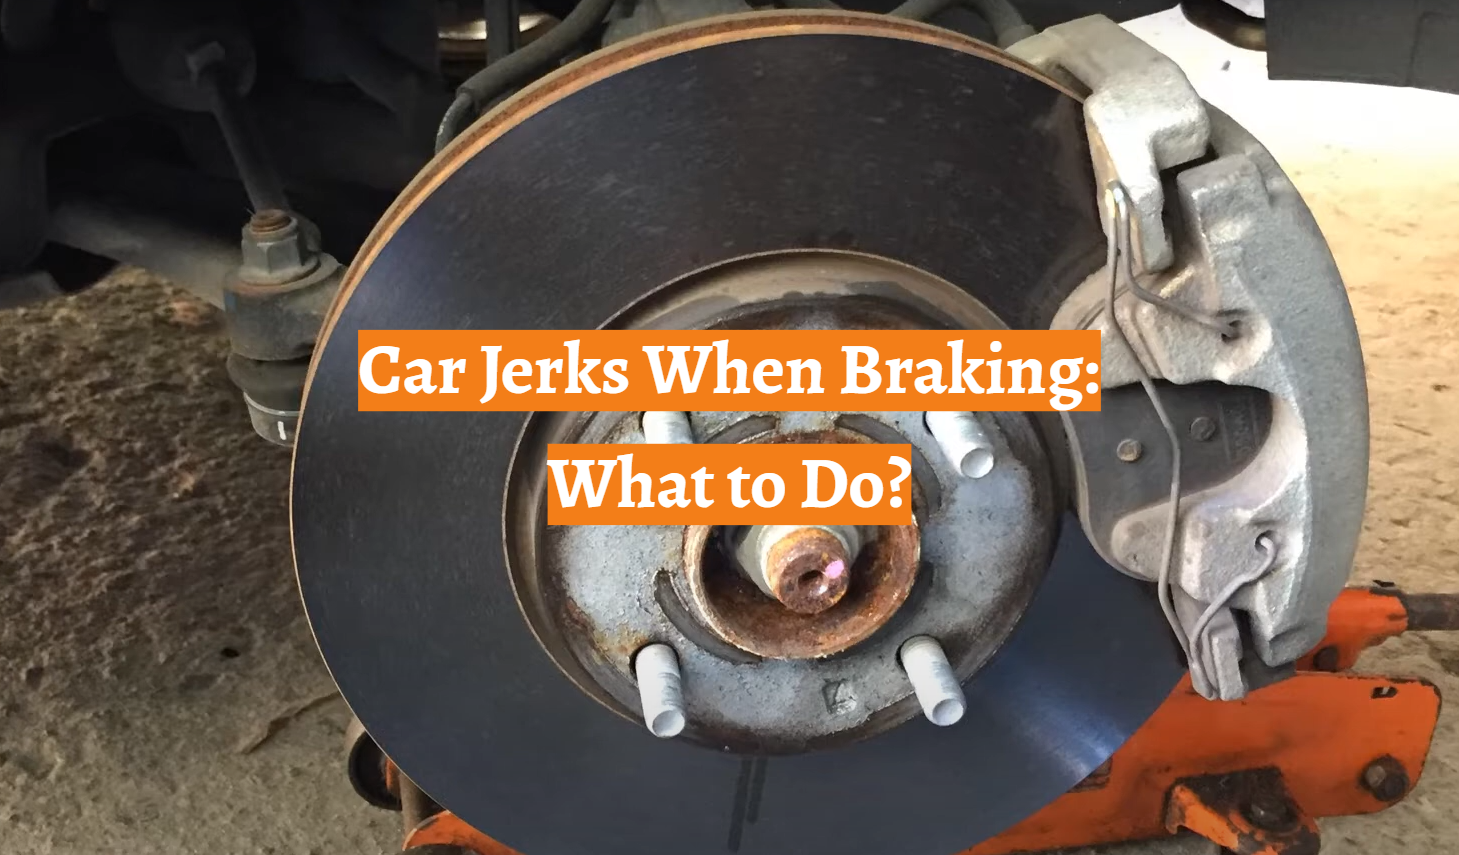 Car Jerks When Braking: What to Do?